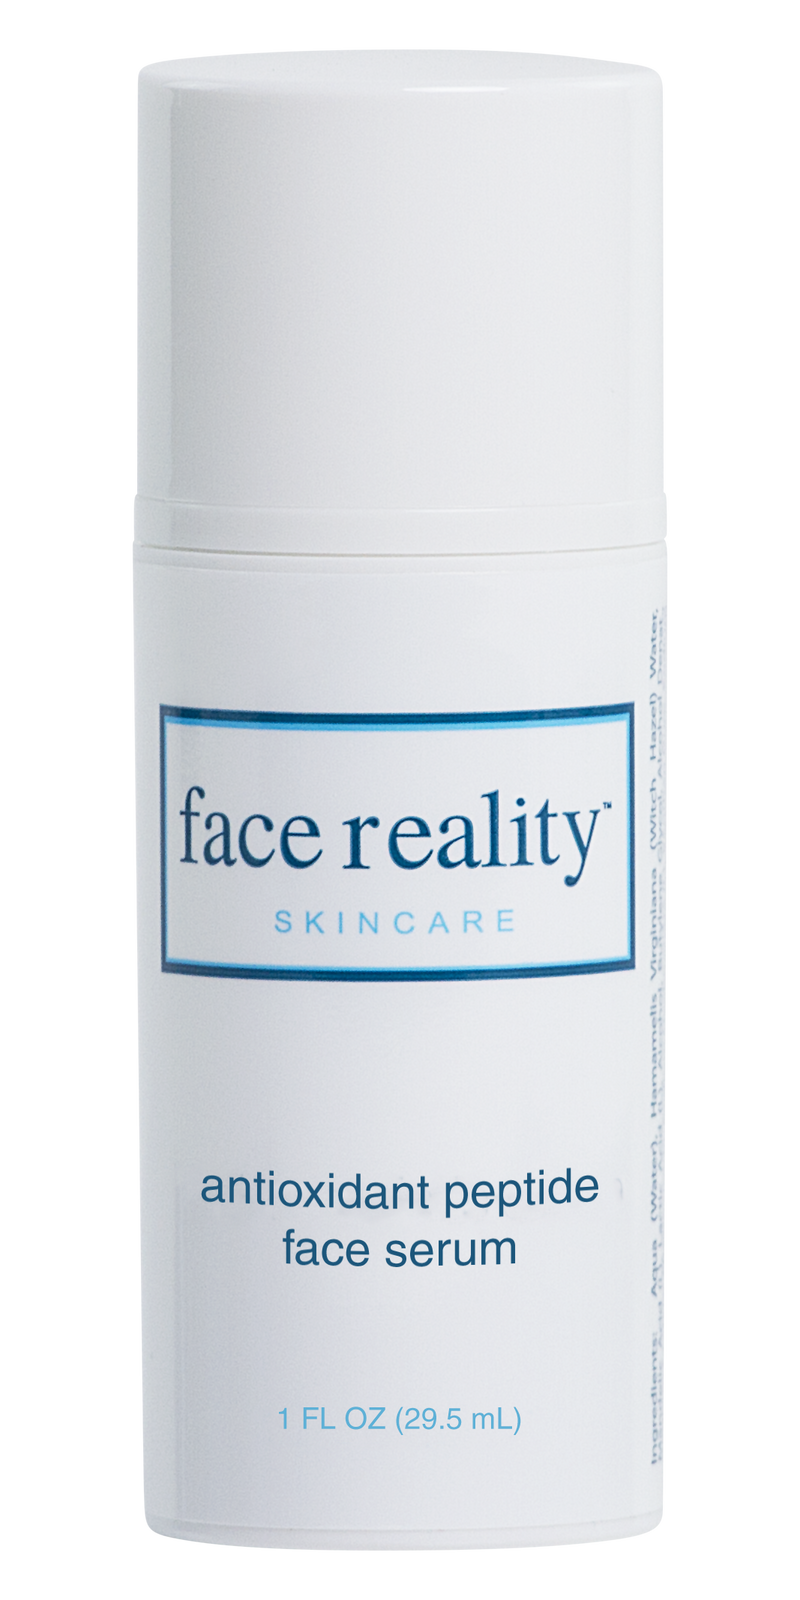 Face Reality Antioxidant Peptide Face Serum